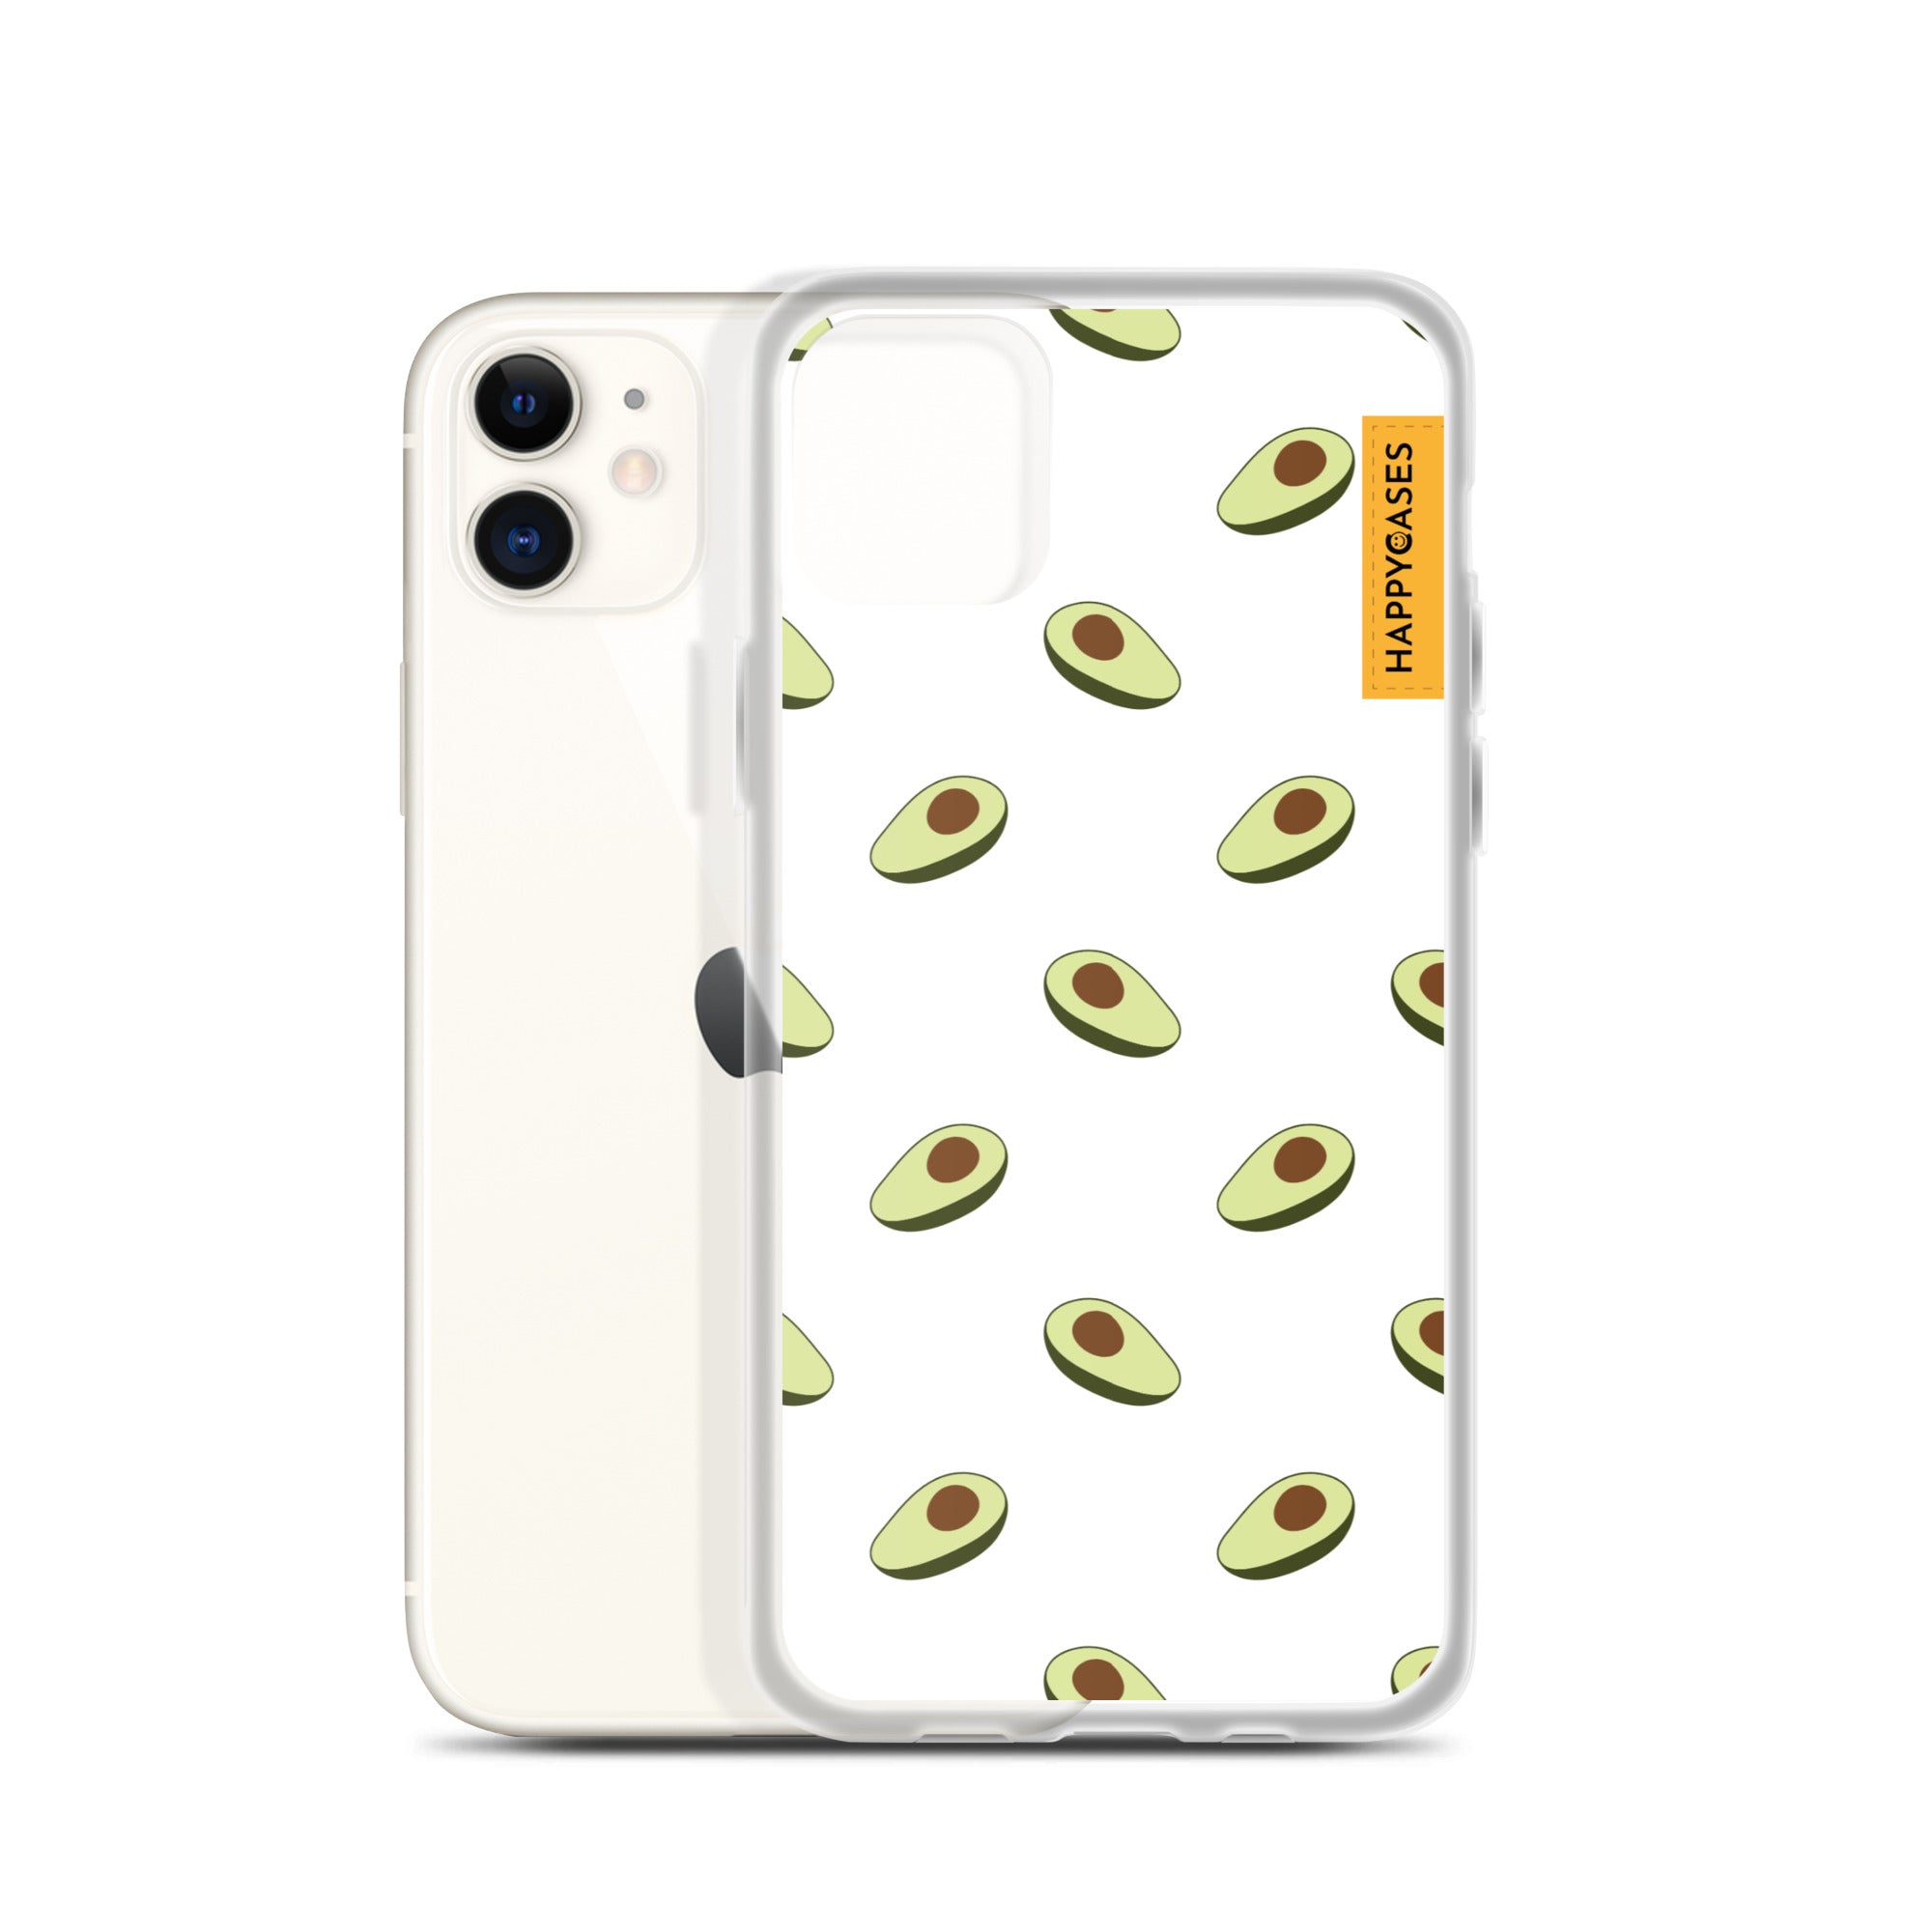 Avocado Mini - iPhone HD Crystal Clear Case